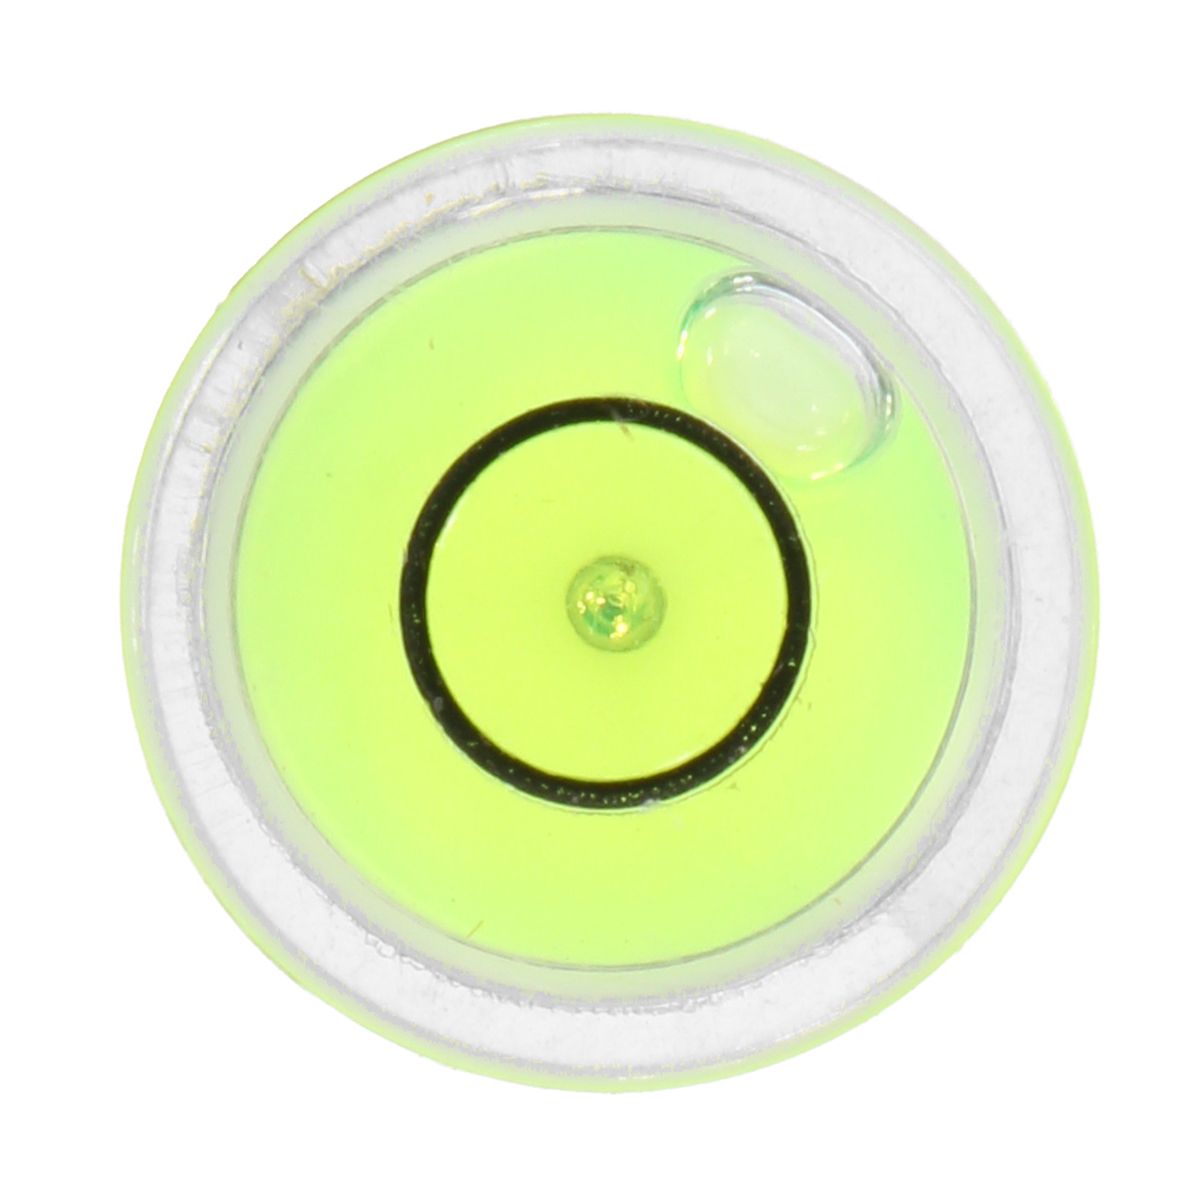 12x7mm-Tiny-Disc-Bubble-Spirit-Level-Round-Circle-Circular-Green-Tripod-1318440